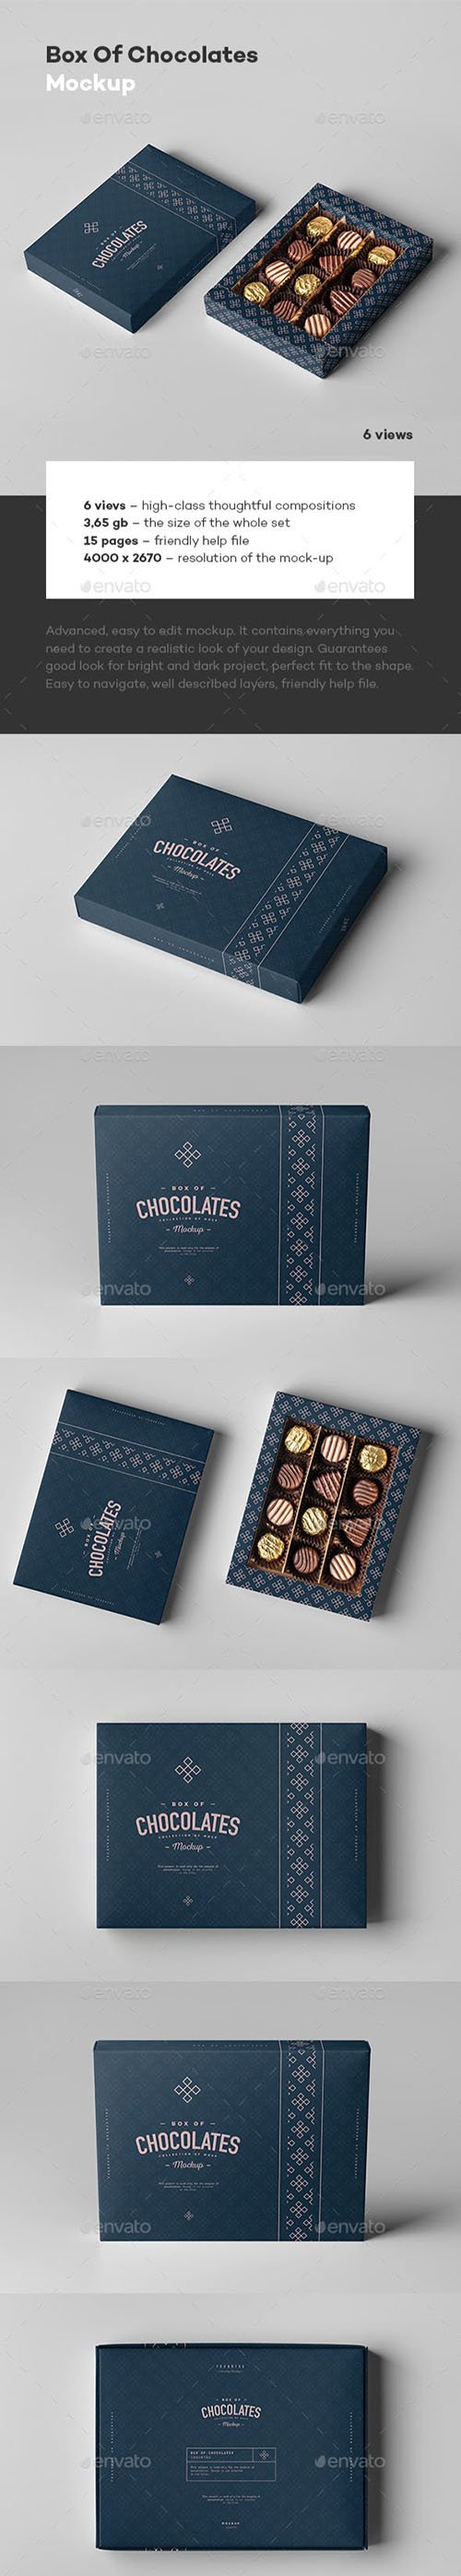 GR - Box Of Chocolates Mock-up 23126932